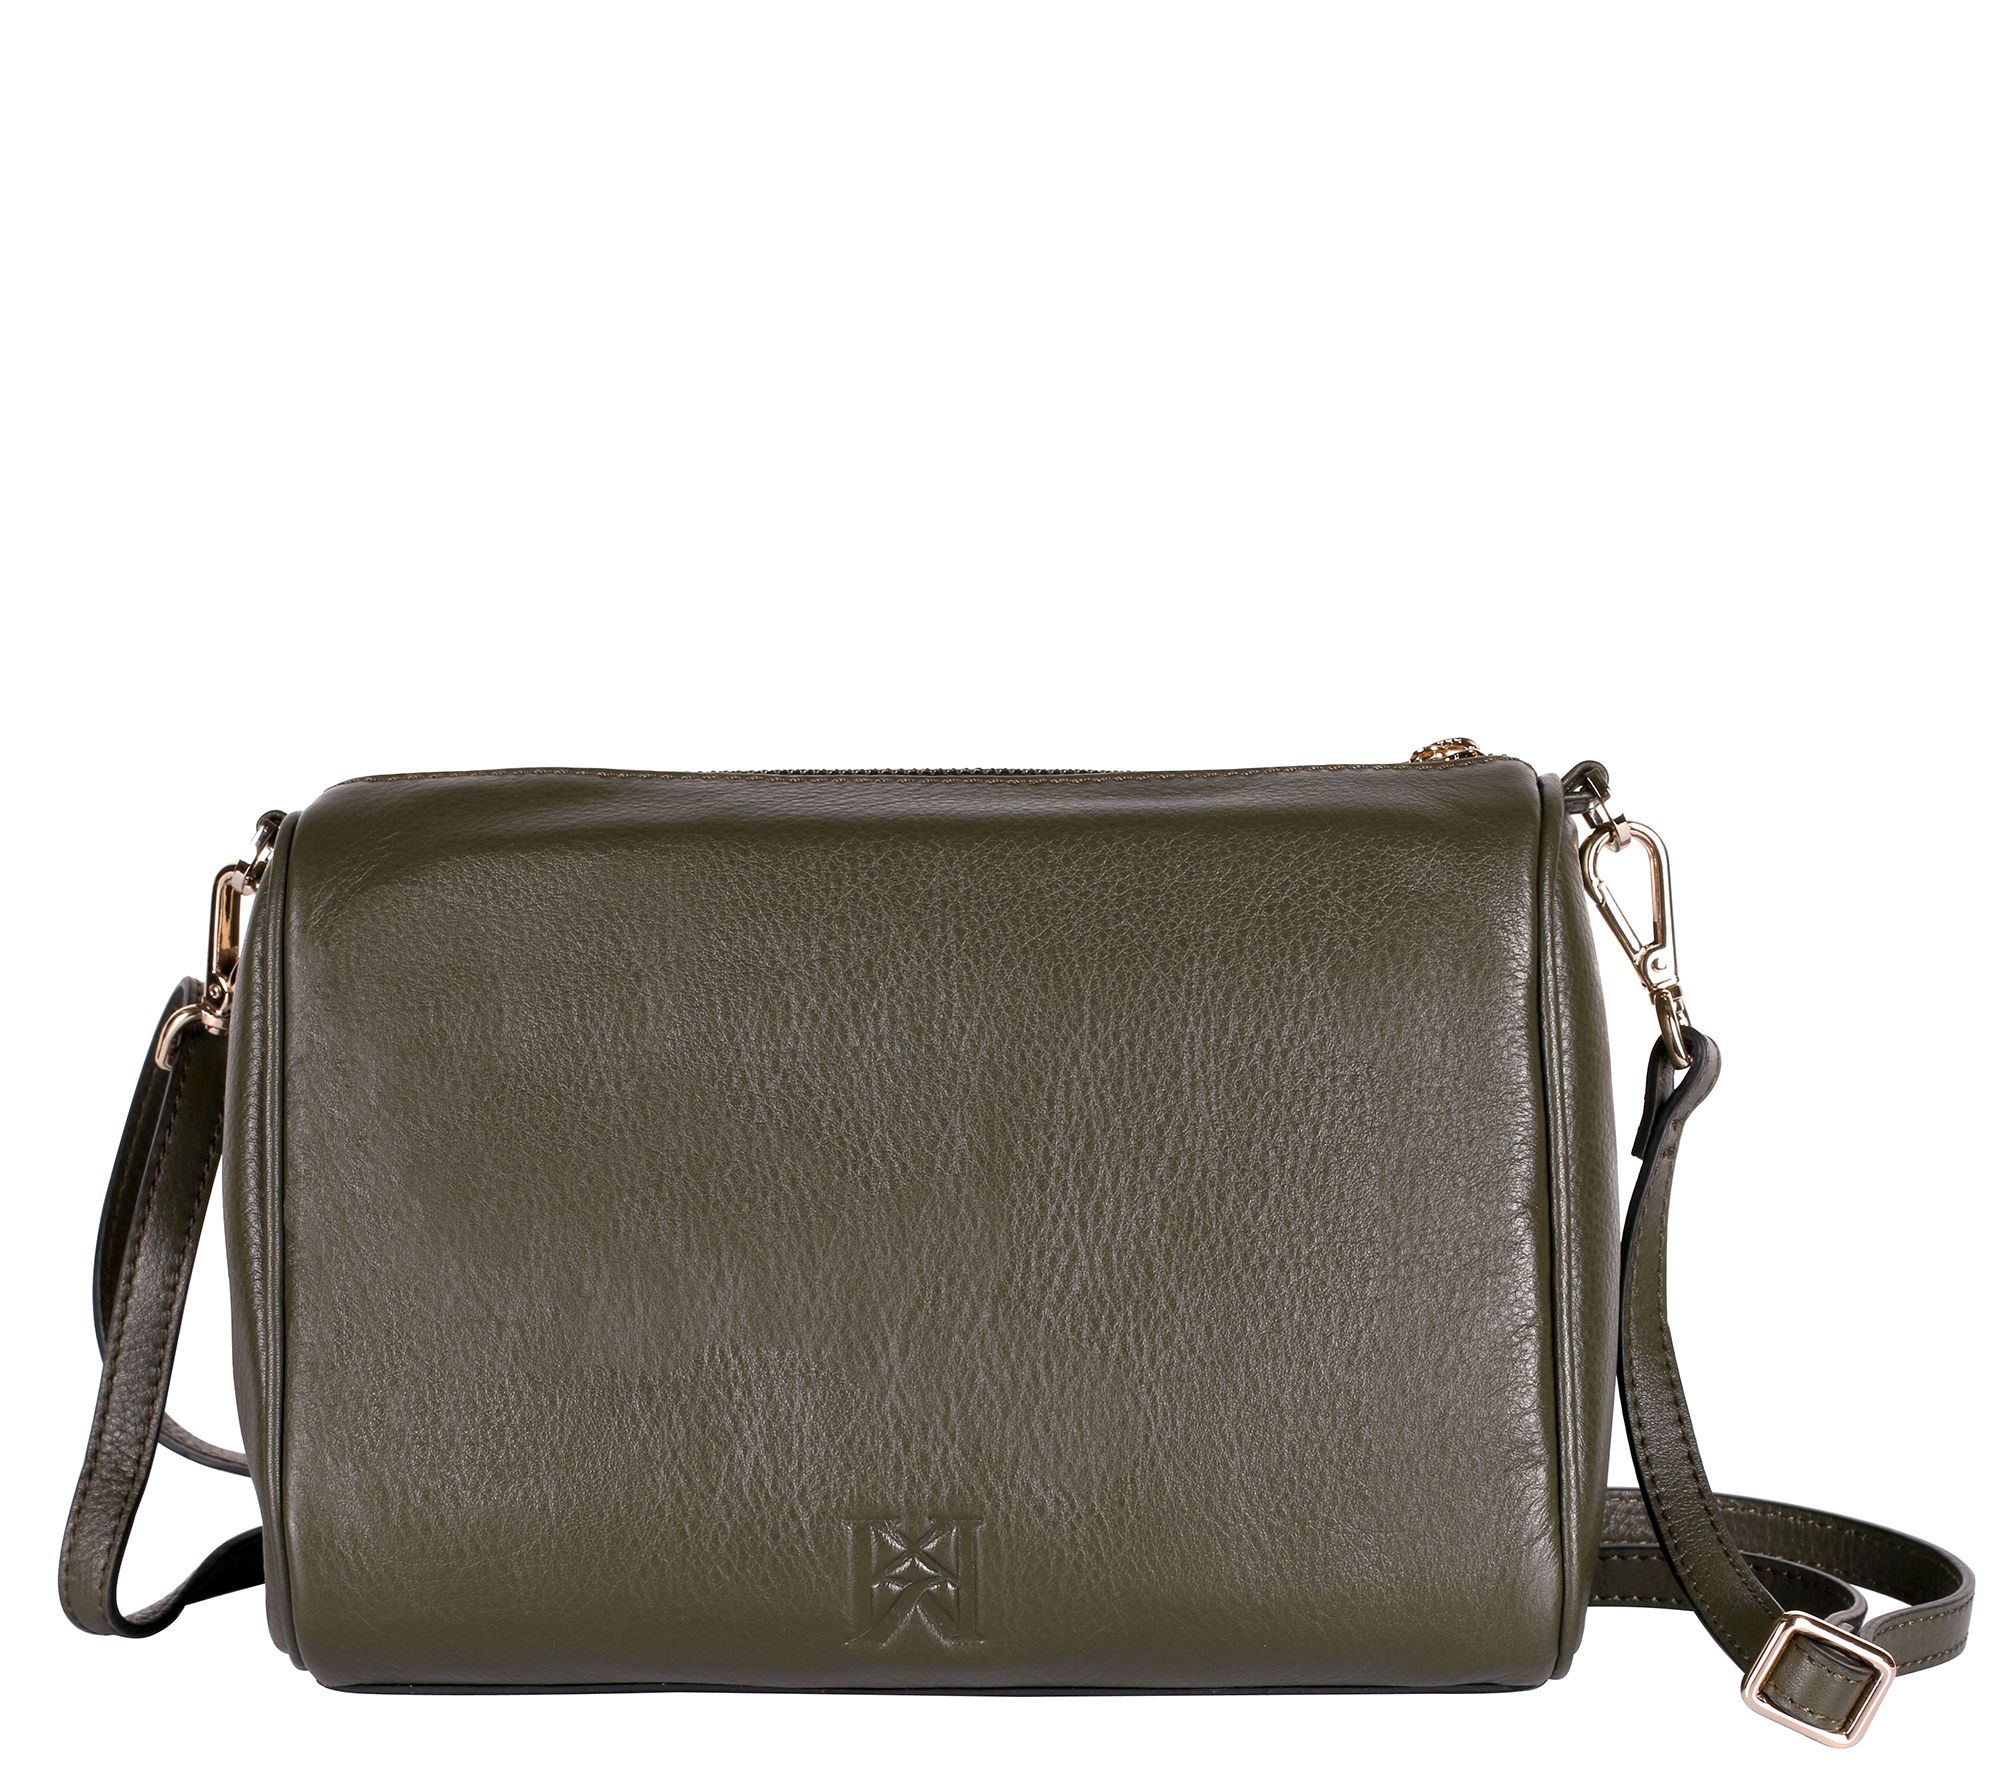 Karla Hanson Irene Leather Crossbody Bag with Front Pocket - QVC.com